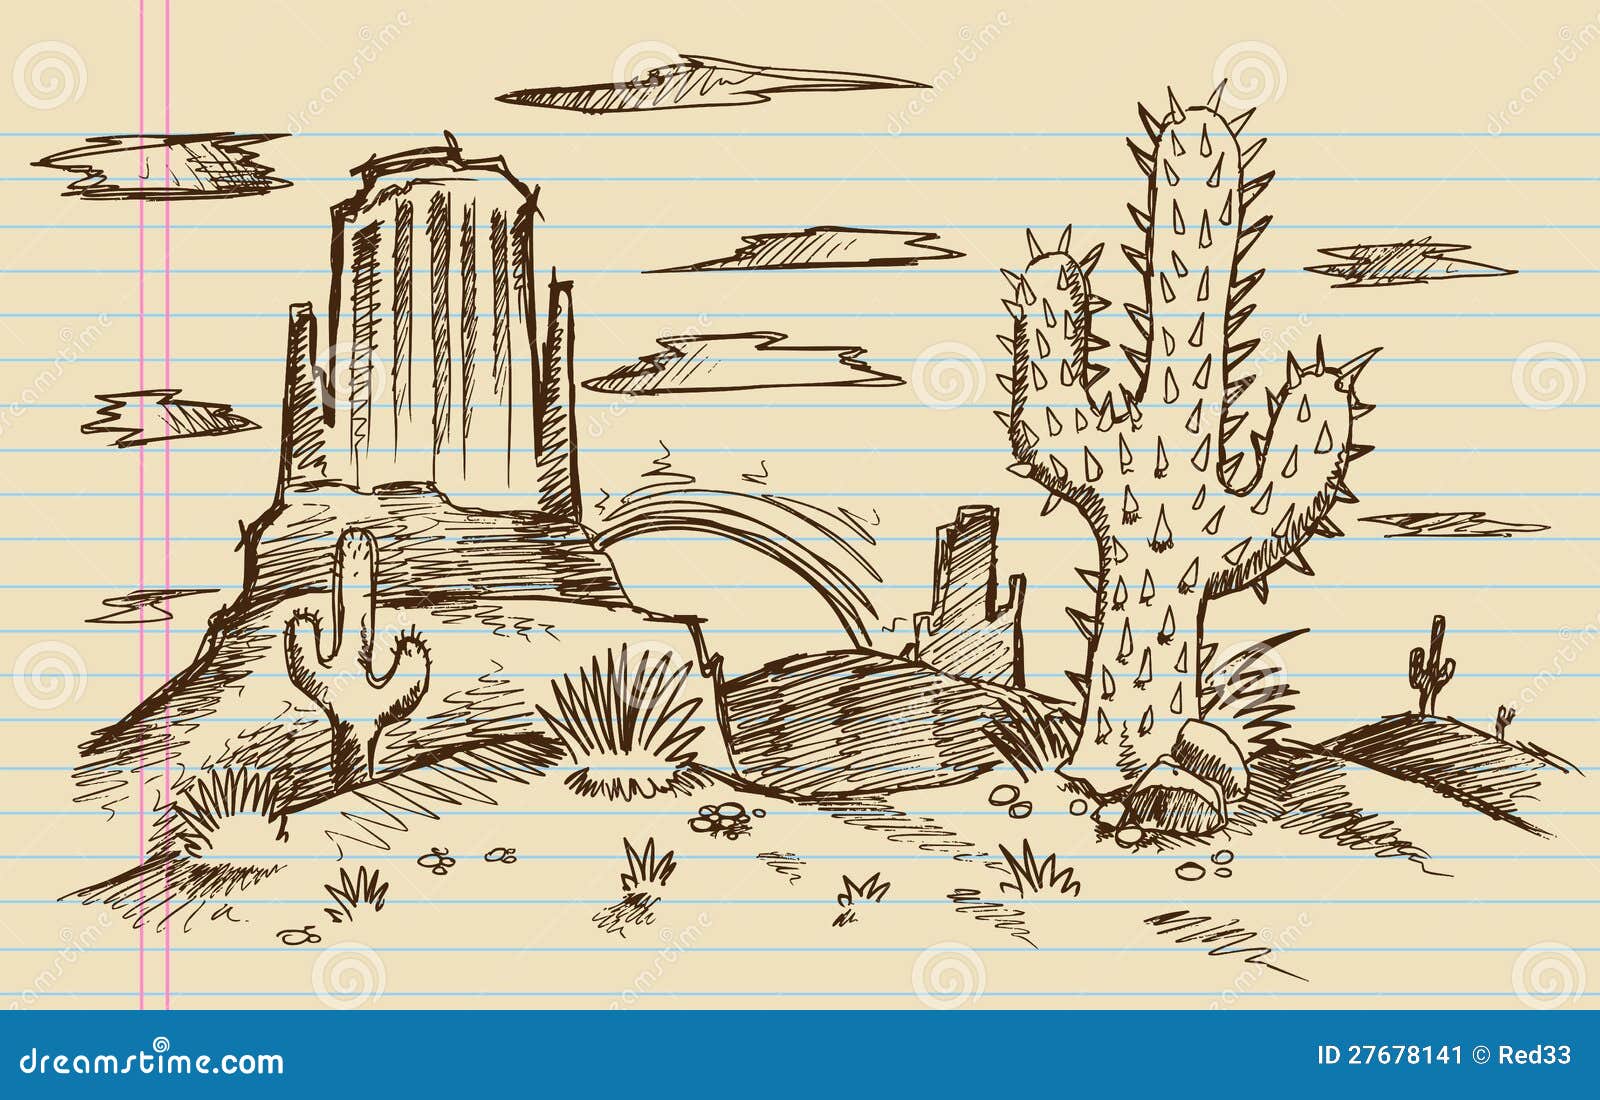 Western Cartoon Landscape Sketch Stock Image - Image: 27678141